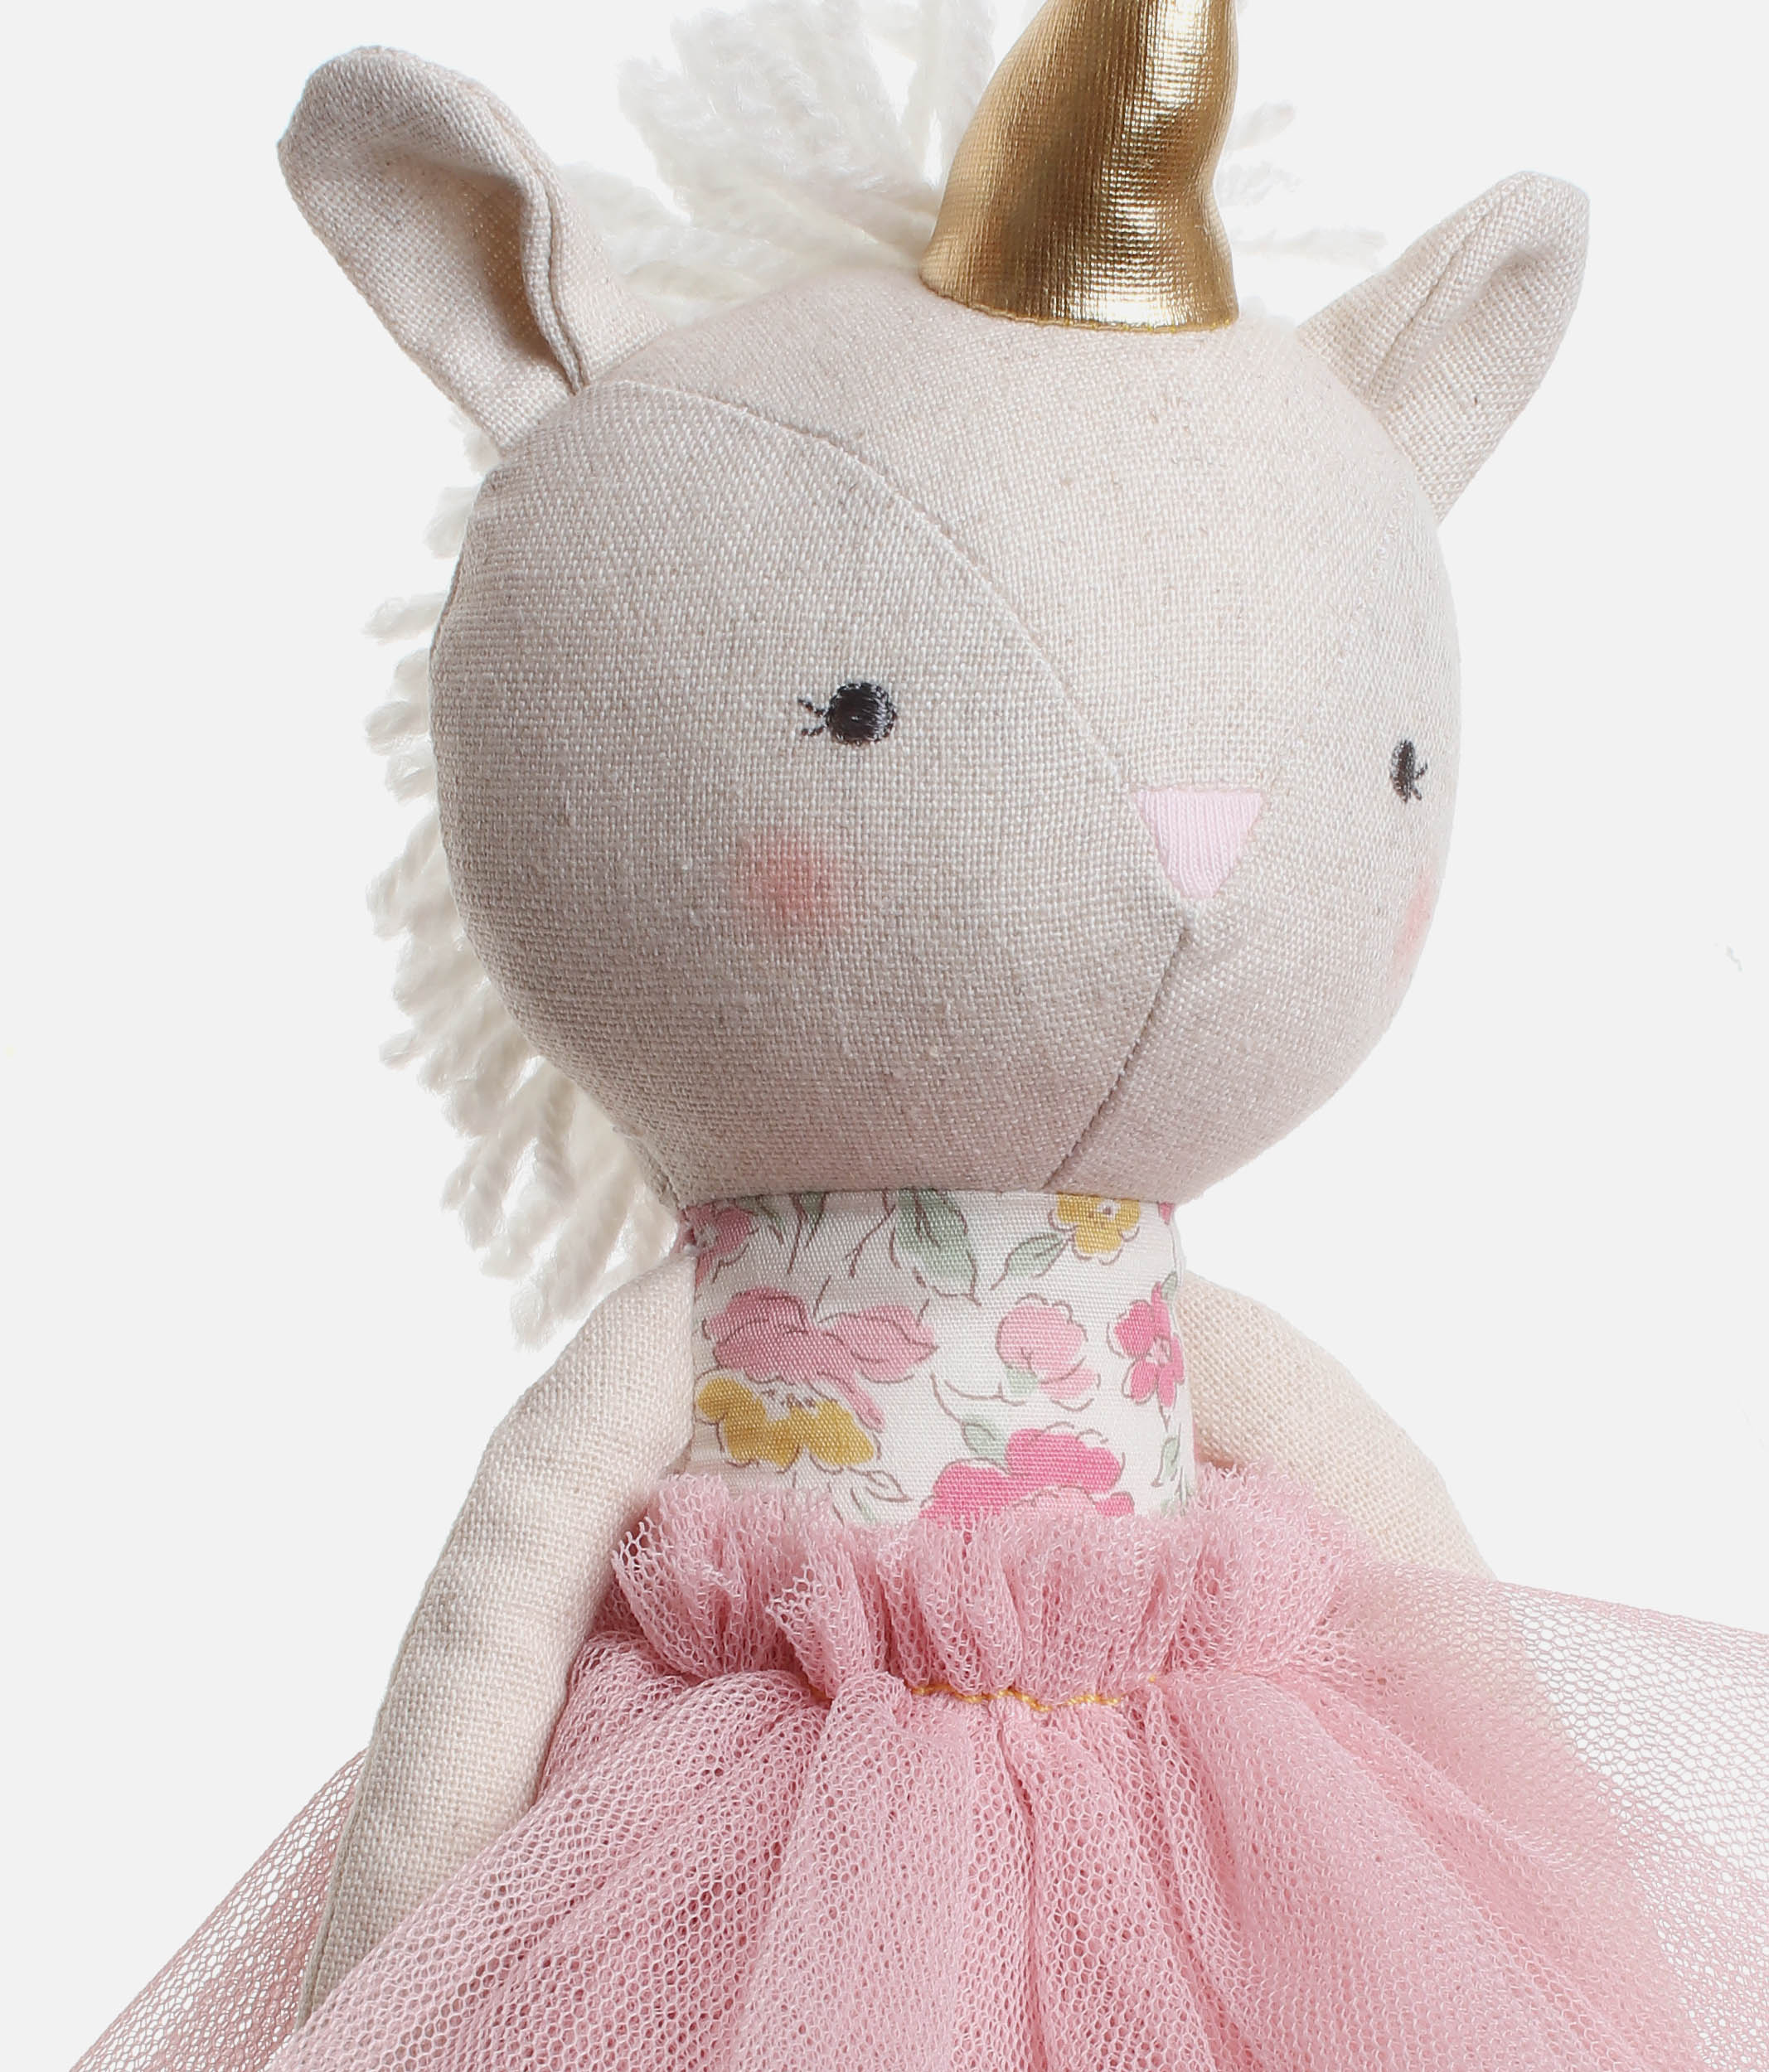 Rose Garden Baby Unicorn Doll - N11525RG